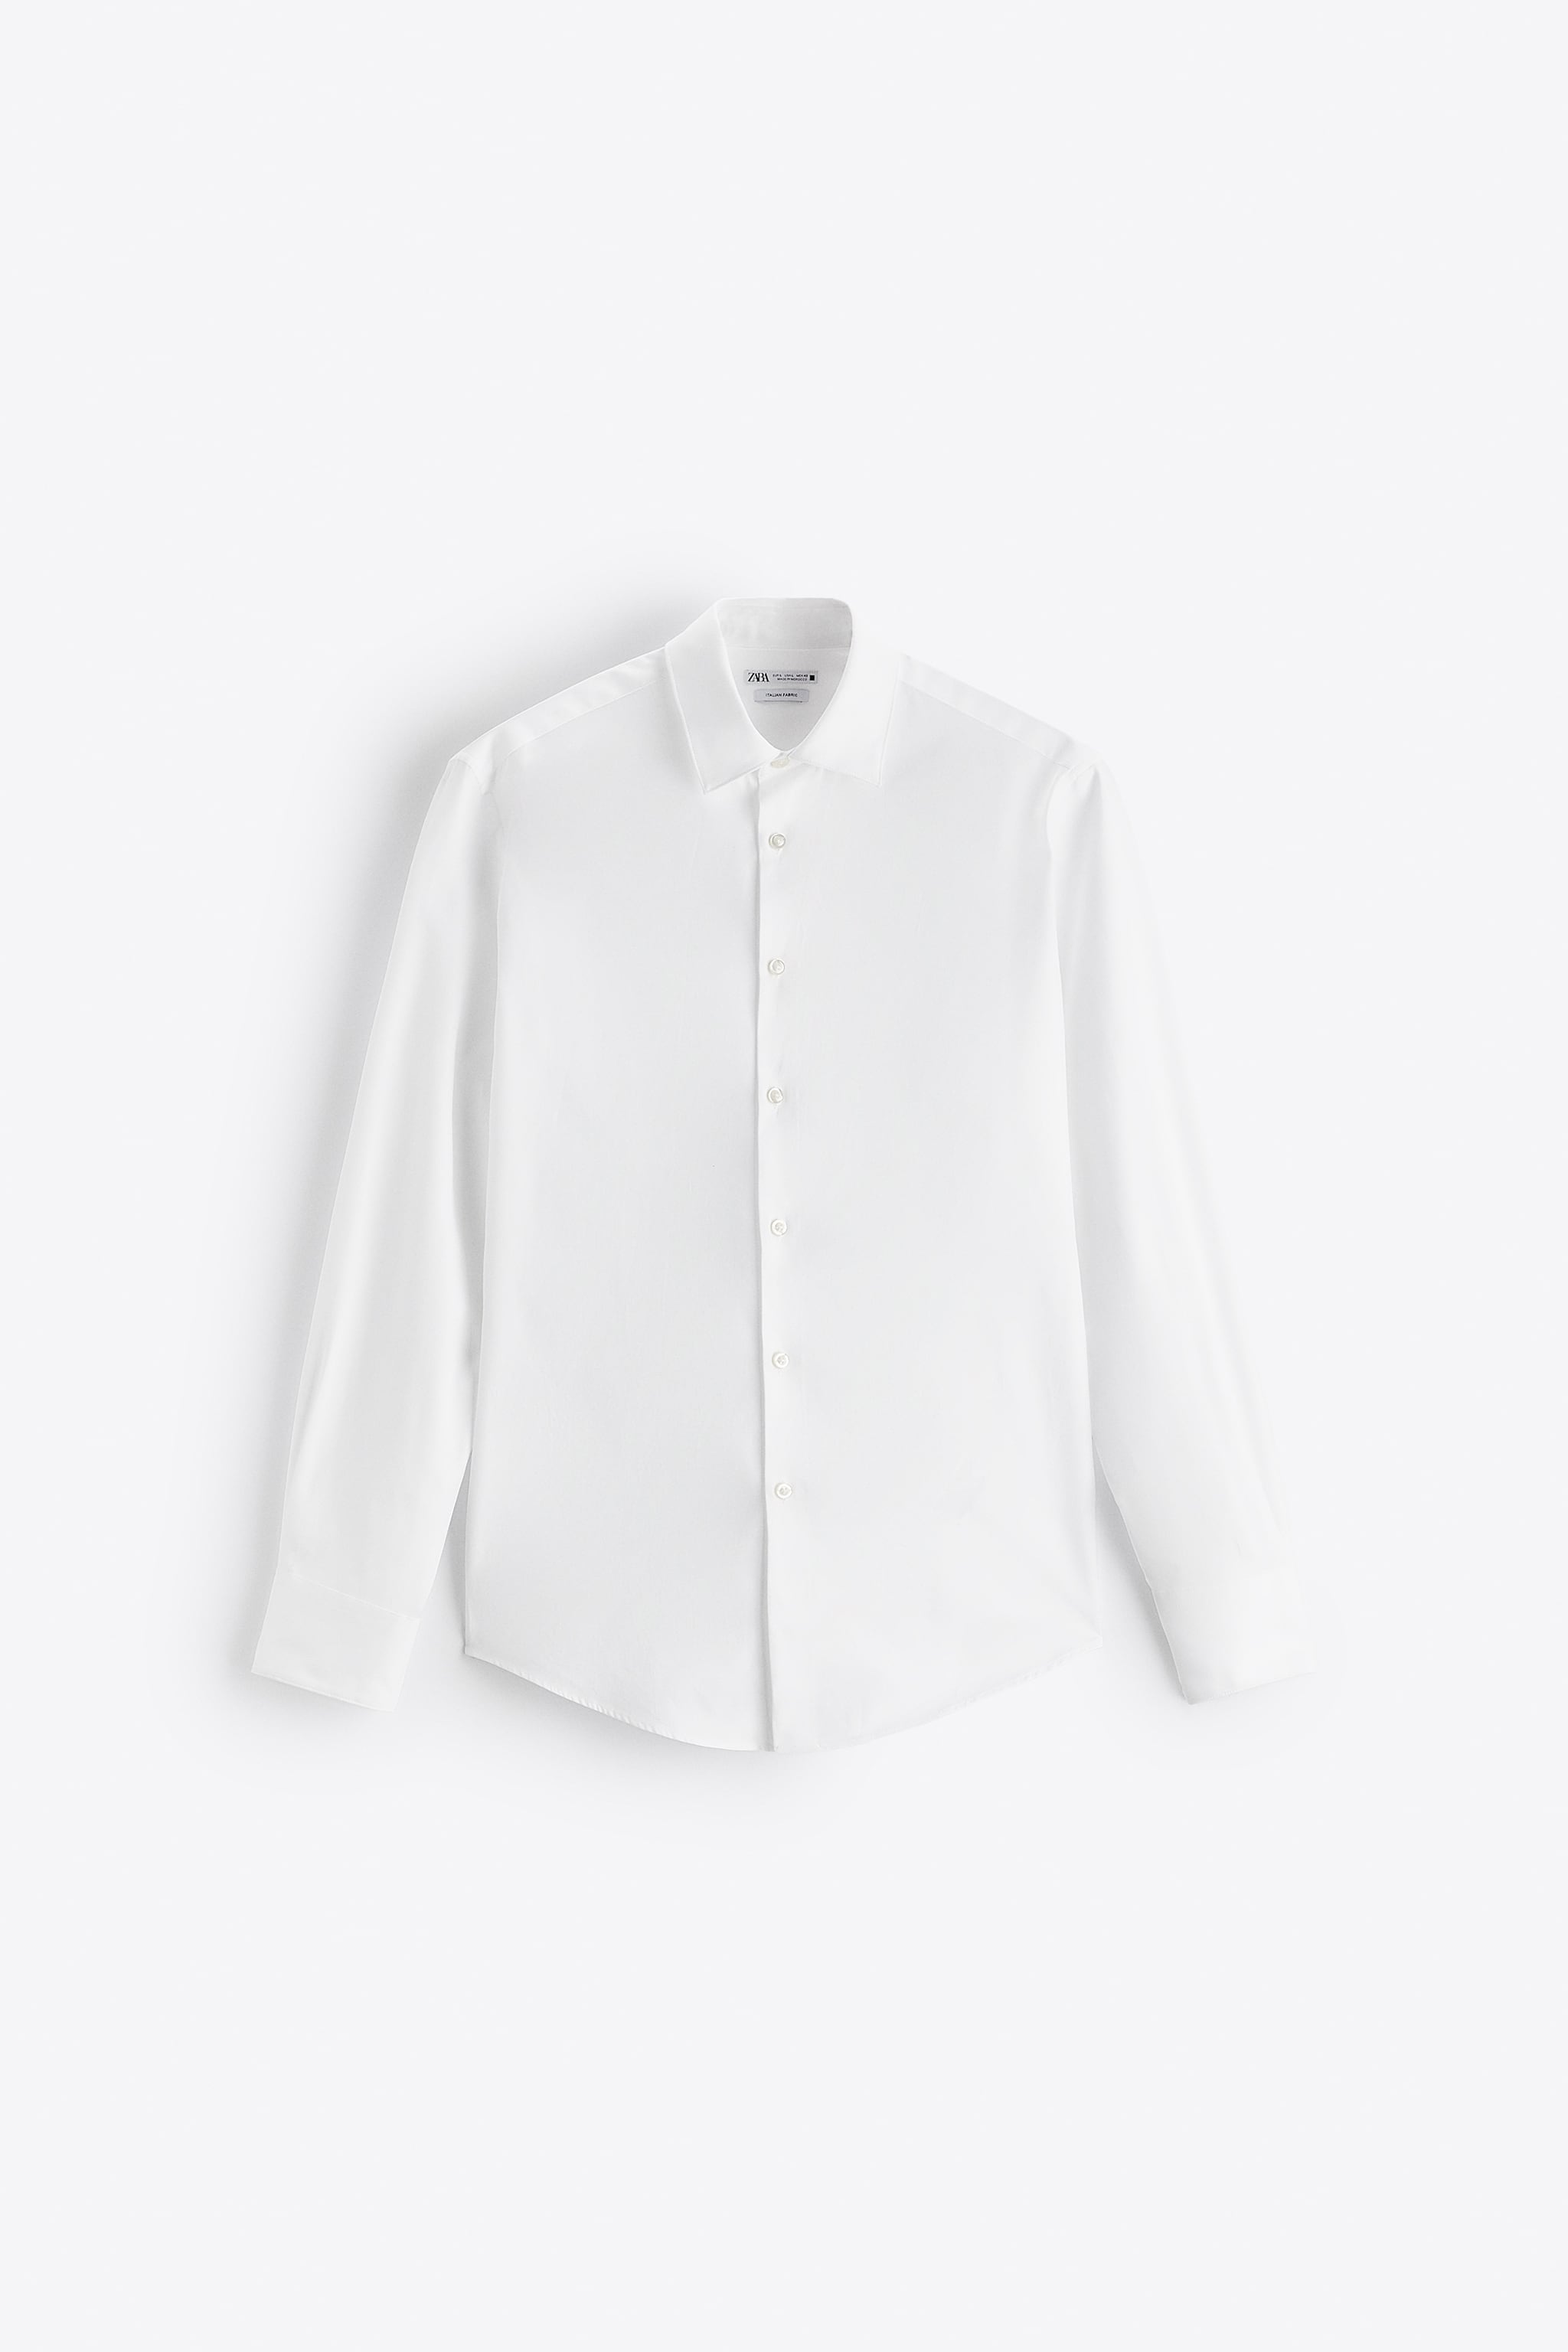 Рубашка мужская ZARA 04465188 белая M (доставка из-за рубежа)